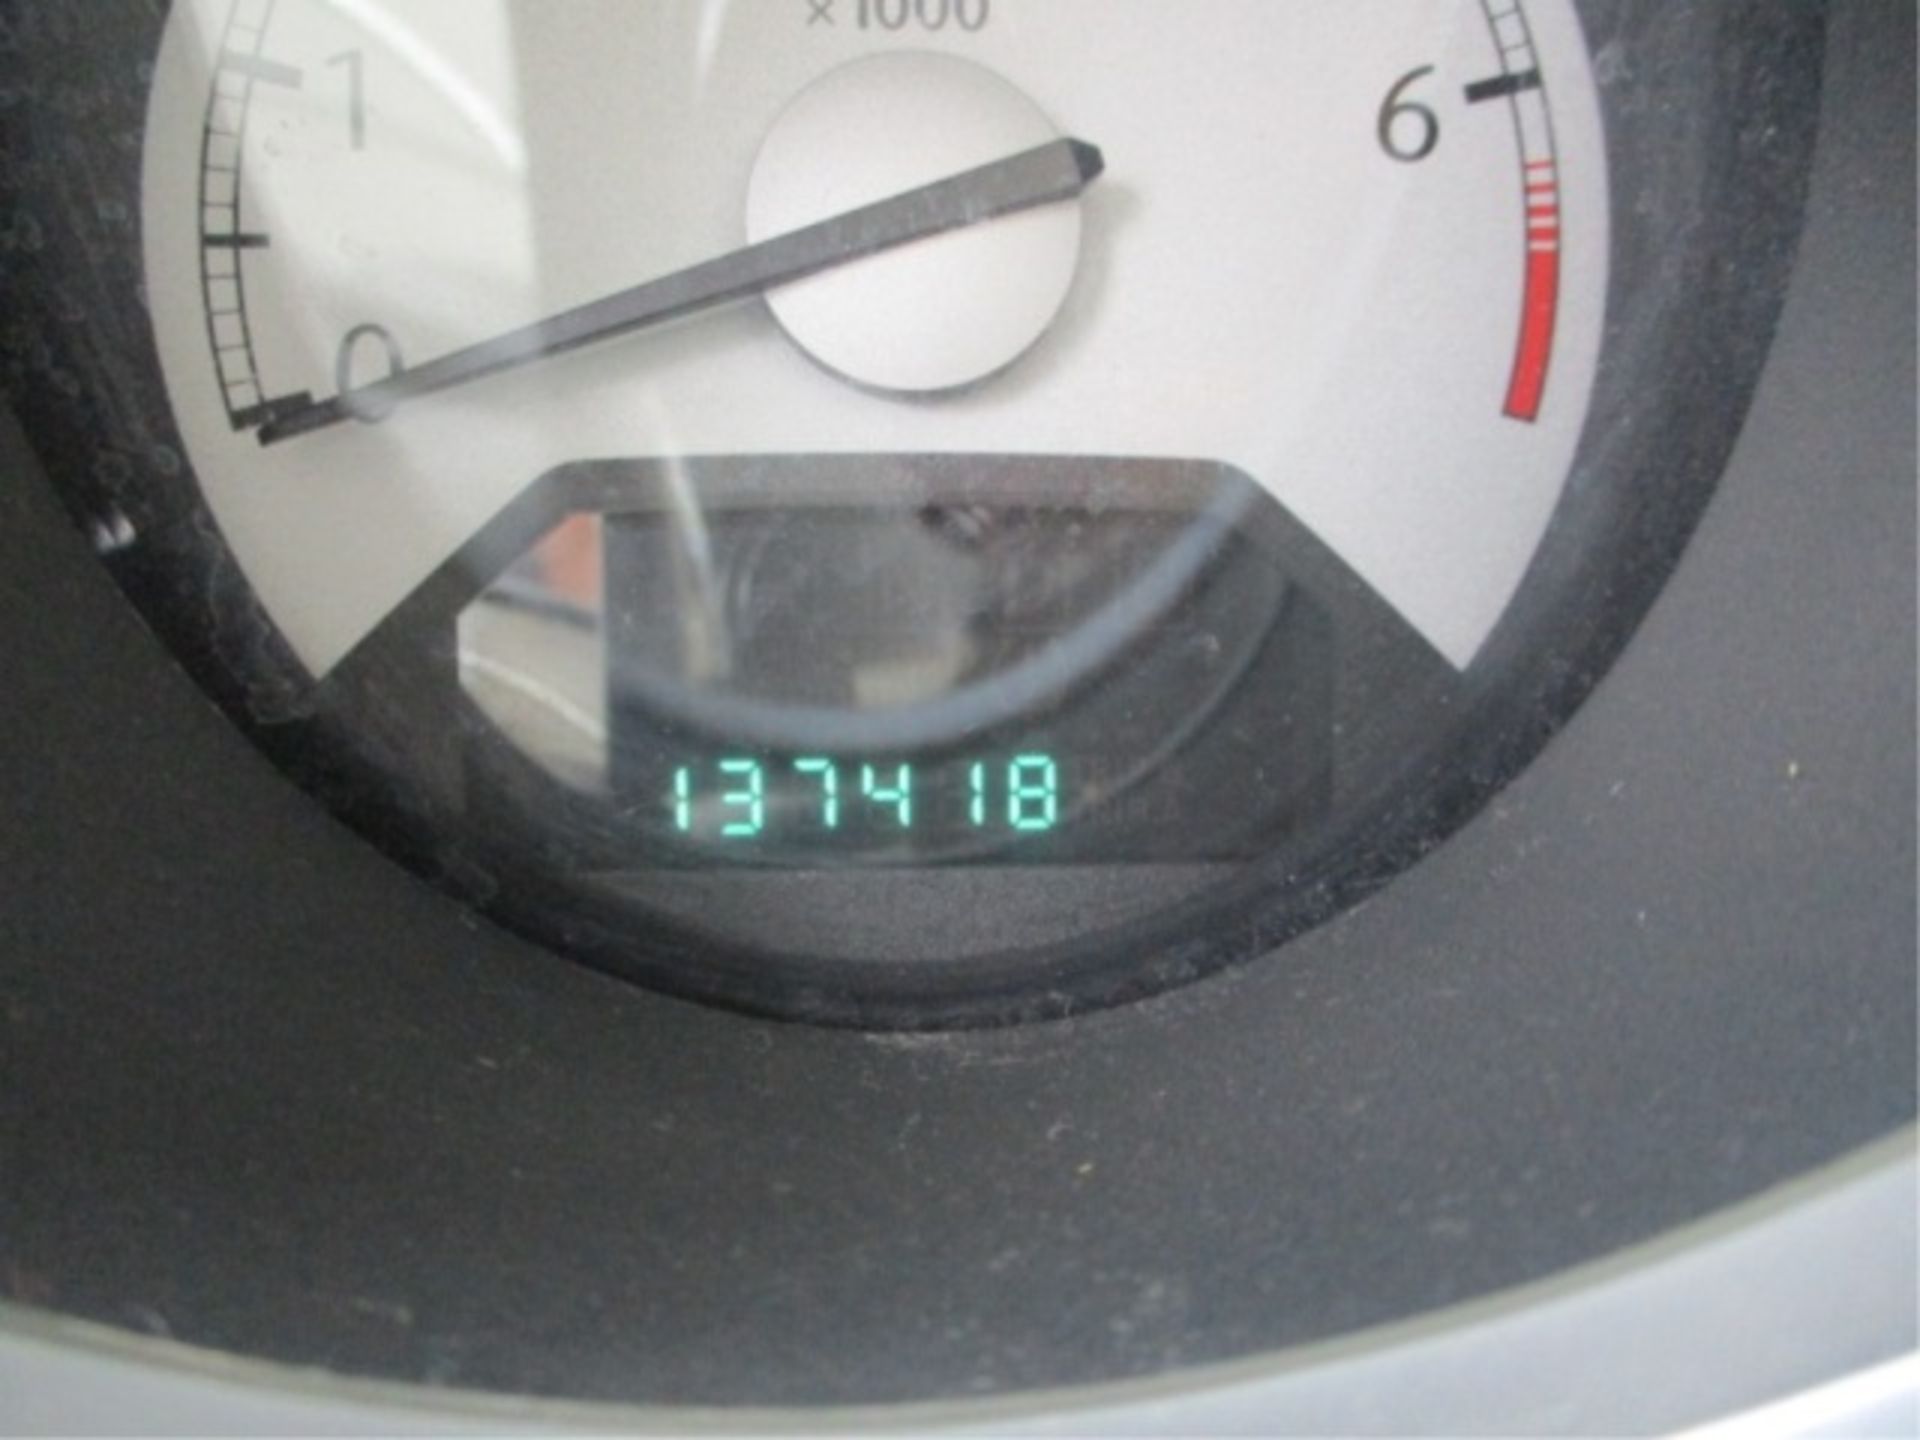 2007 Chrysler Sebring Sedan, 2.7L V6 Gas, Automatic, S/N: 1C3LC56R17N524072, Miles/Hours - 137410 - Image 22 of 22